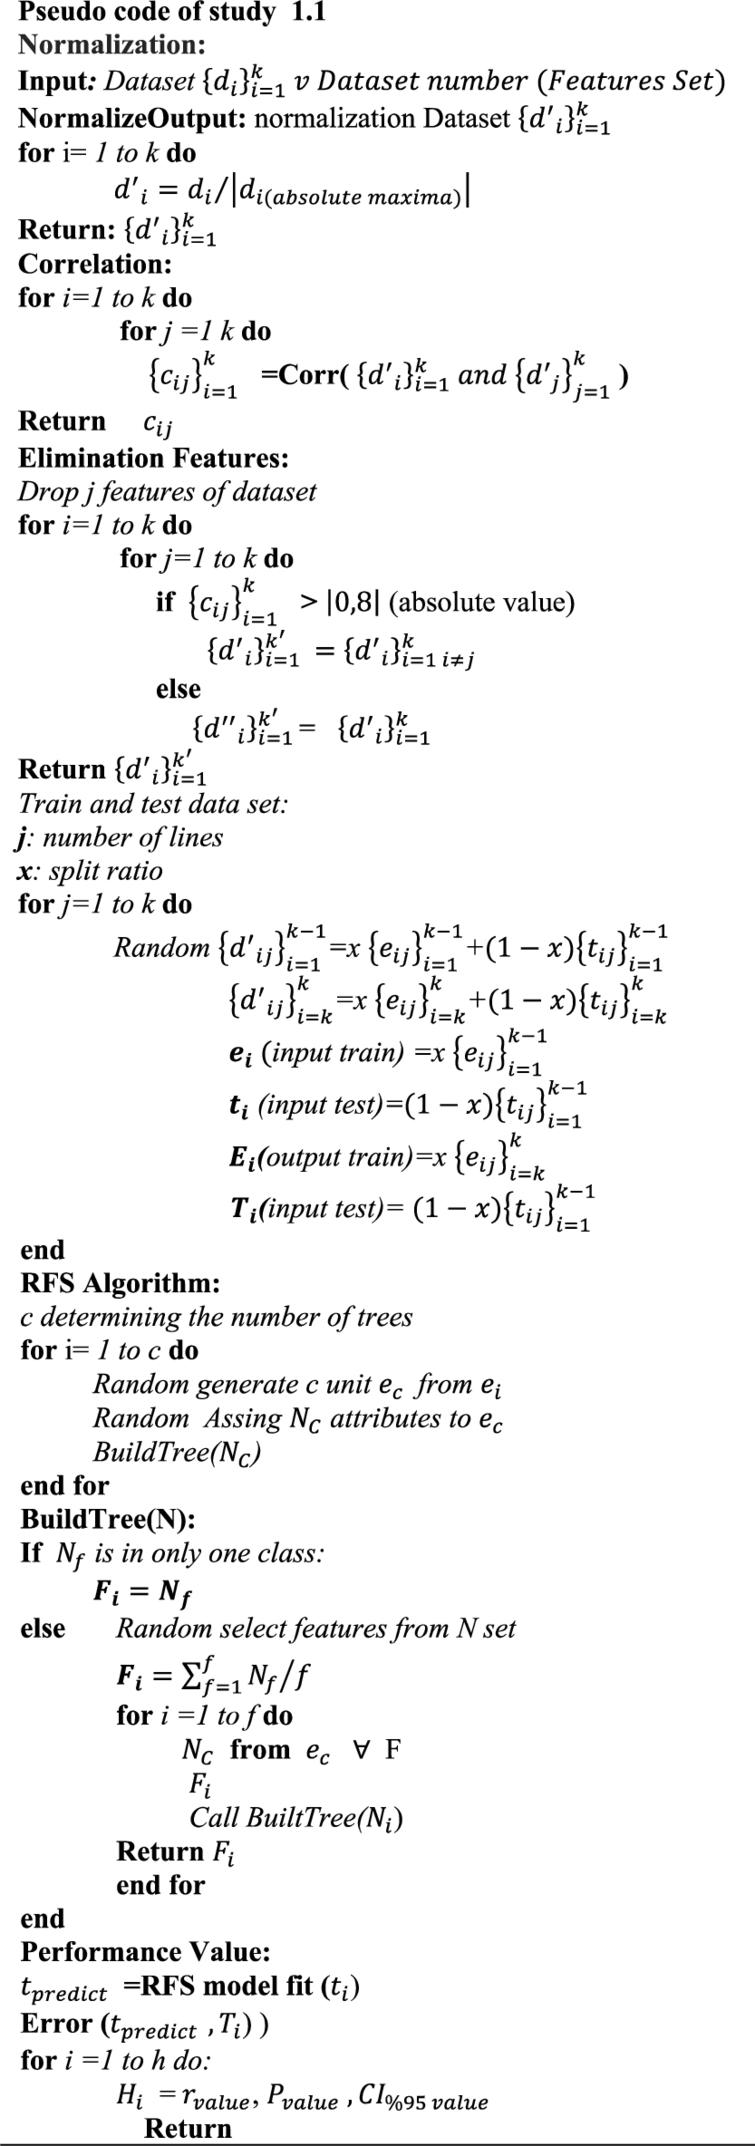 The RFR model’s pseudocode.